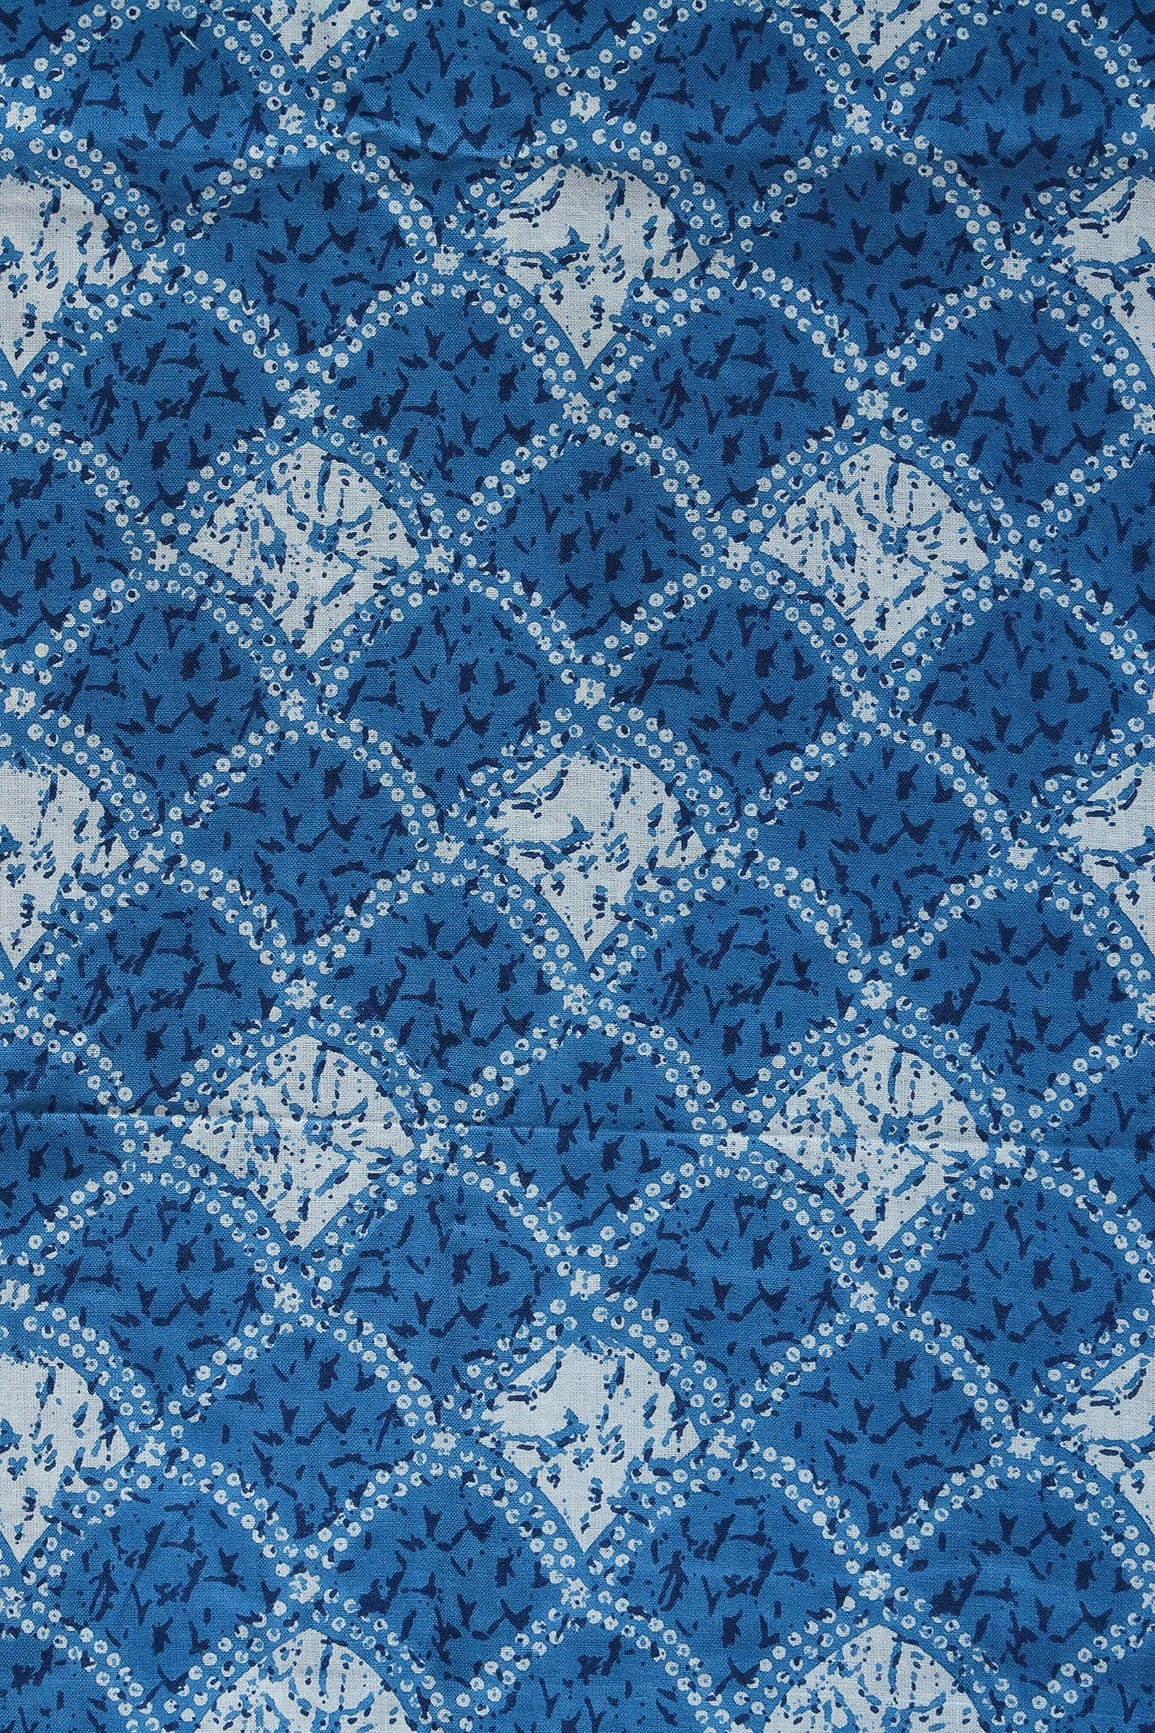 doeraa Prints Cobalt Blue And White Trellis Pattern Print On Pure Cotton Fabric